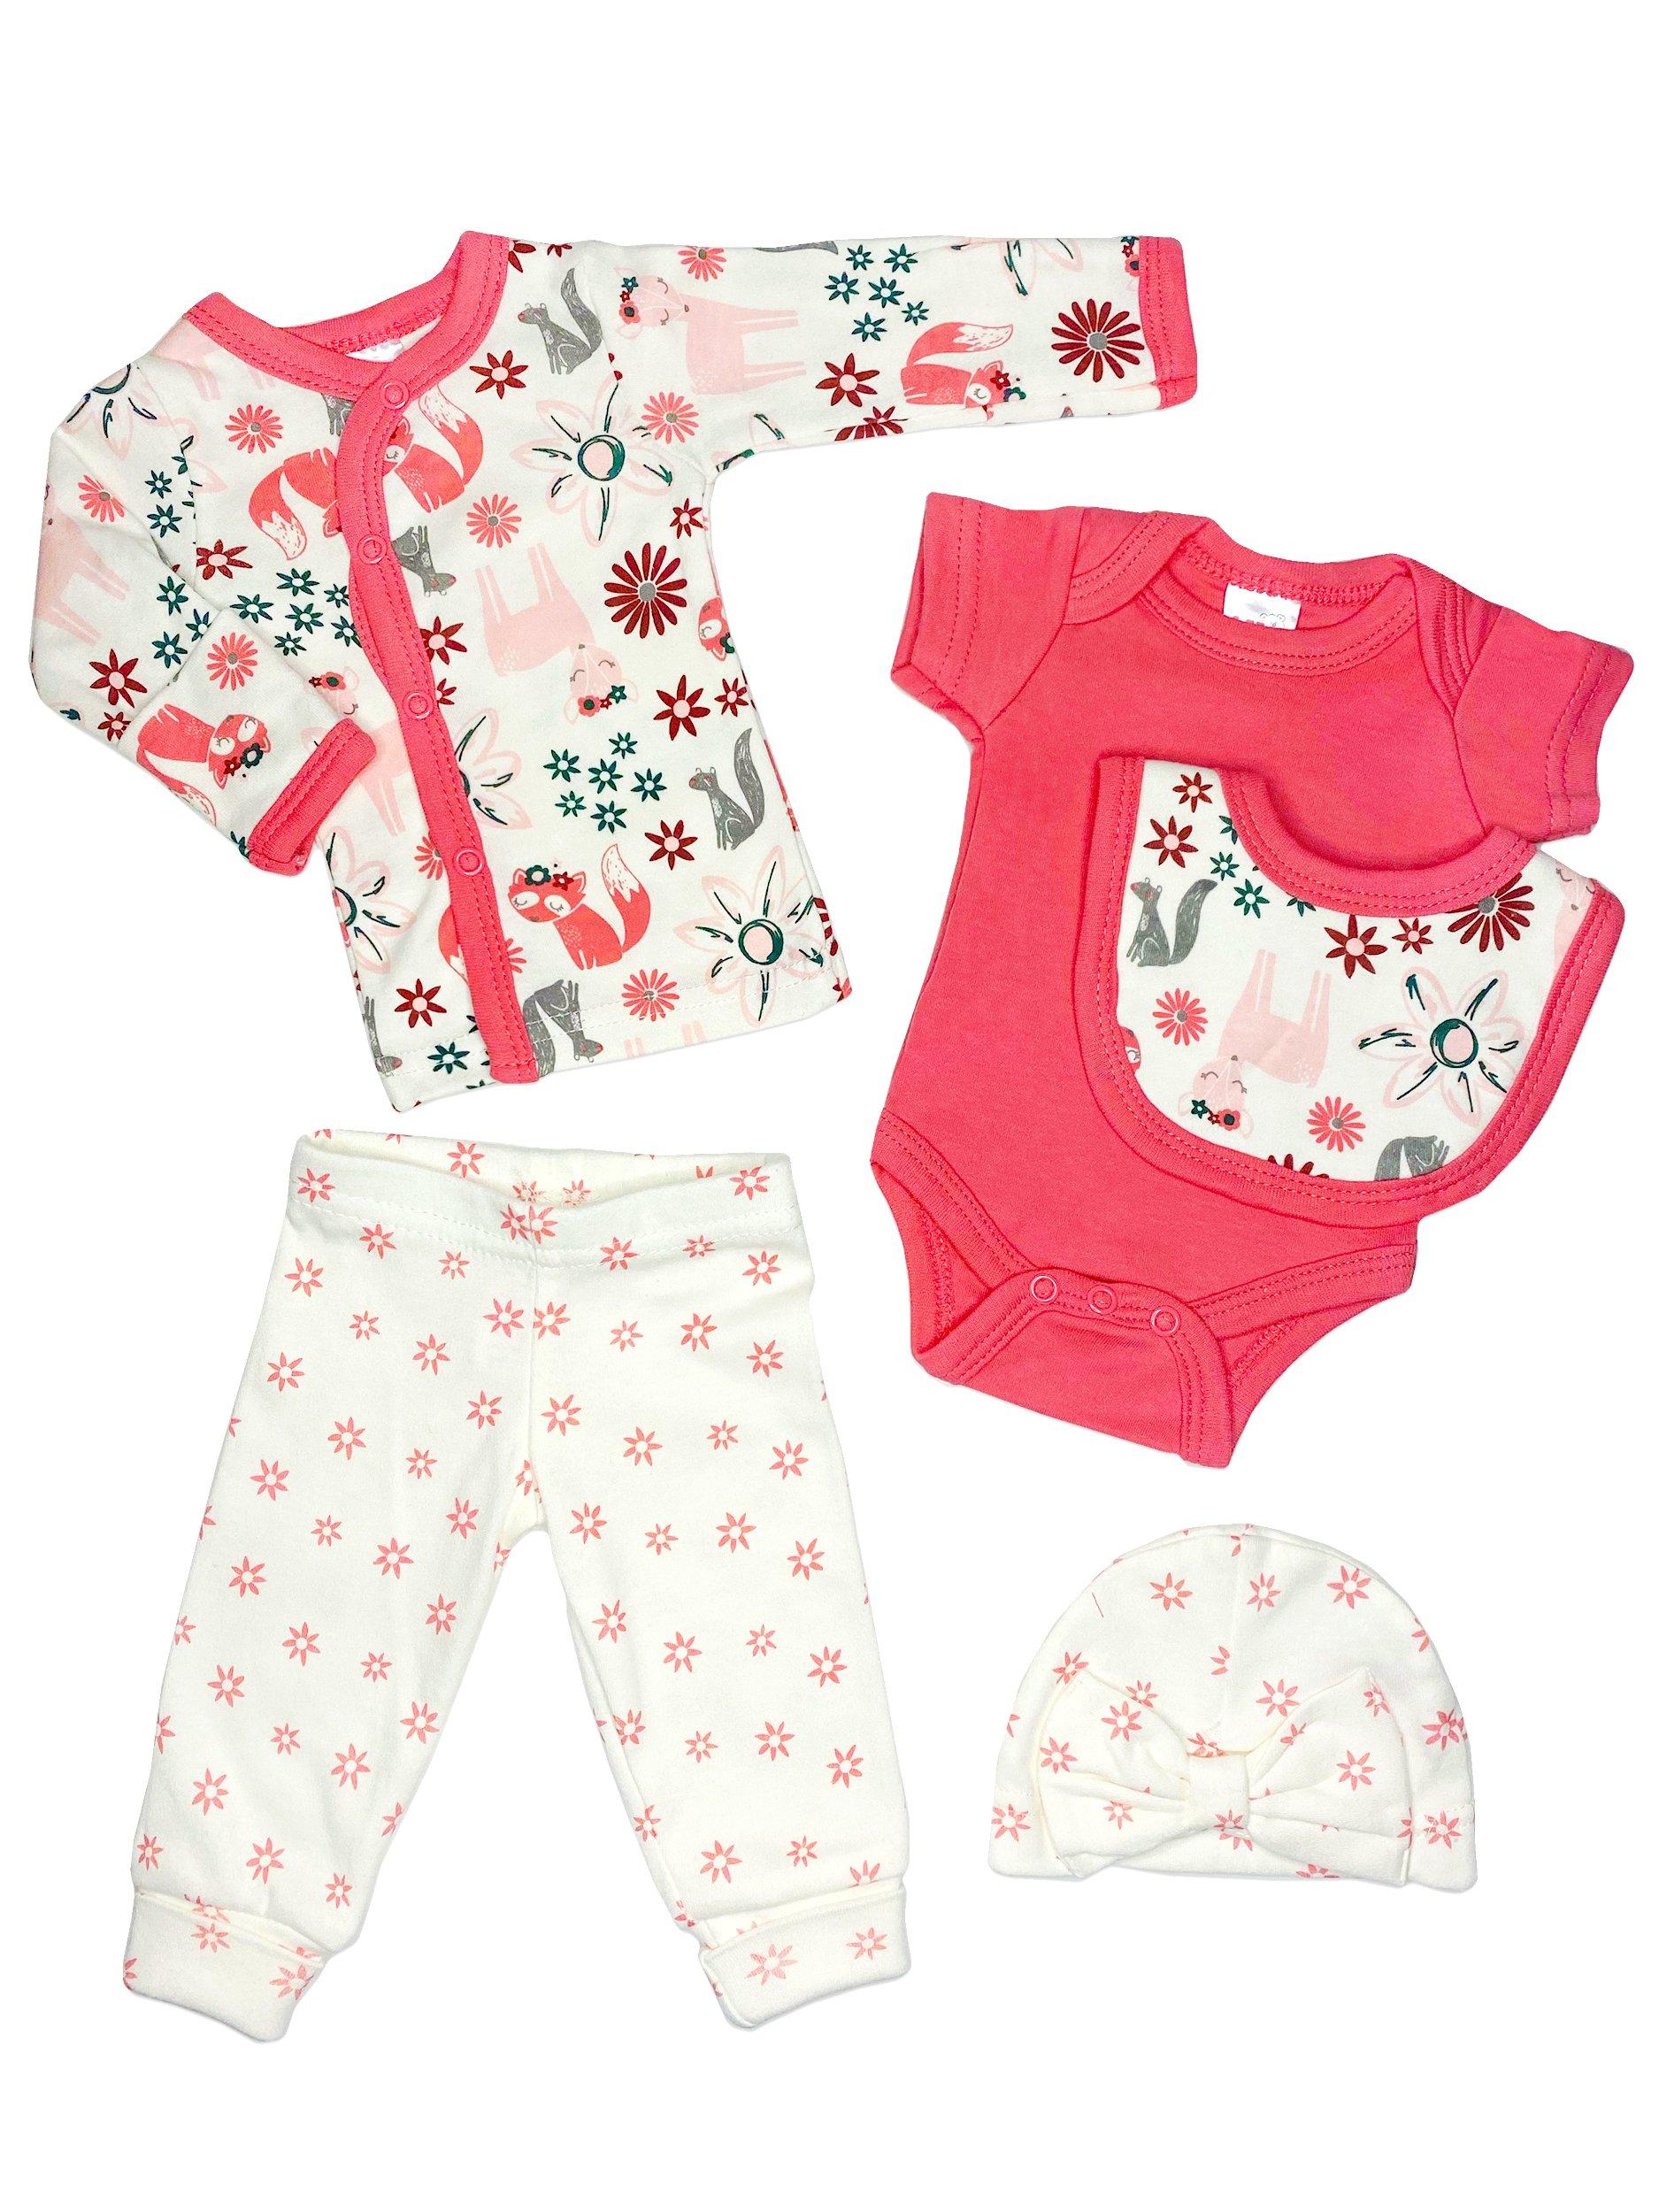 Pink Woodland Animals 5 piece set - Vest, Top, Trousers, Bib & Hat - Set - Soft Touch